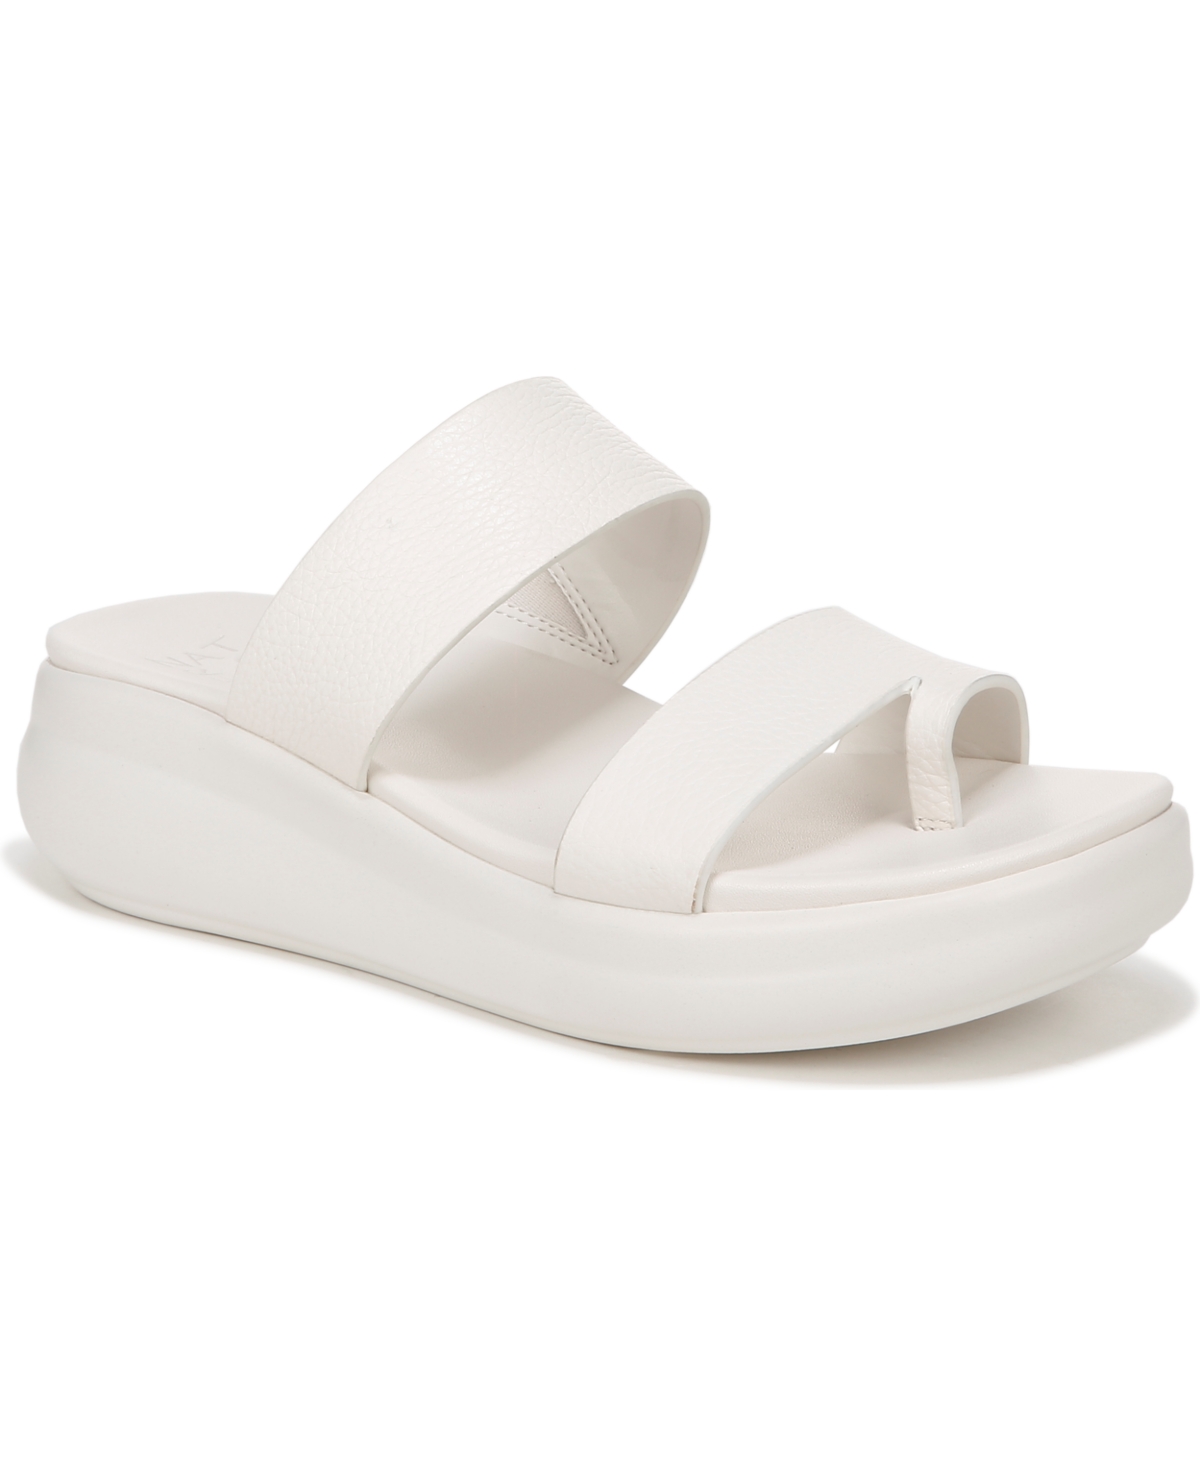 Drift 2 Slide Sandals - Warm White Leather